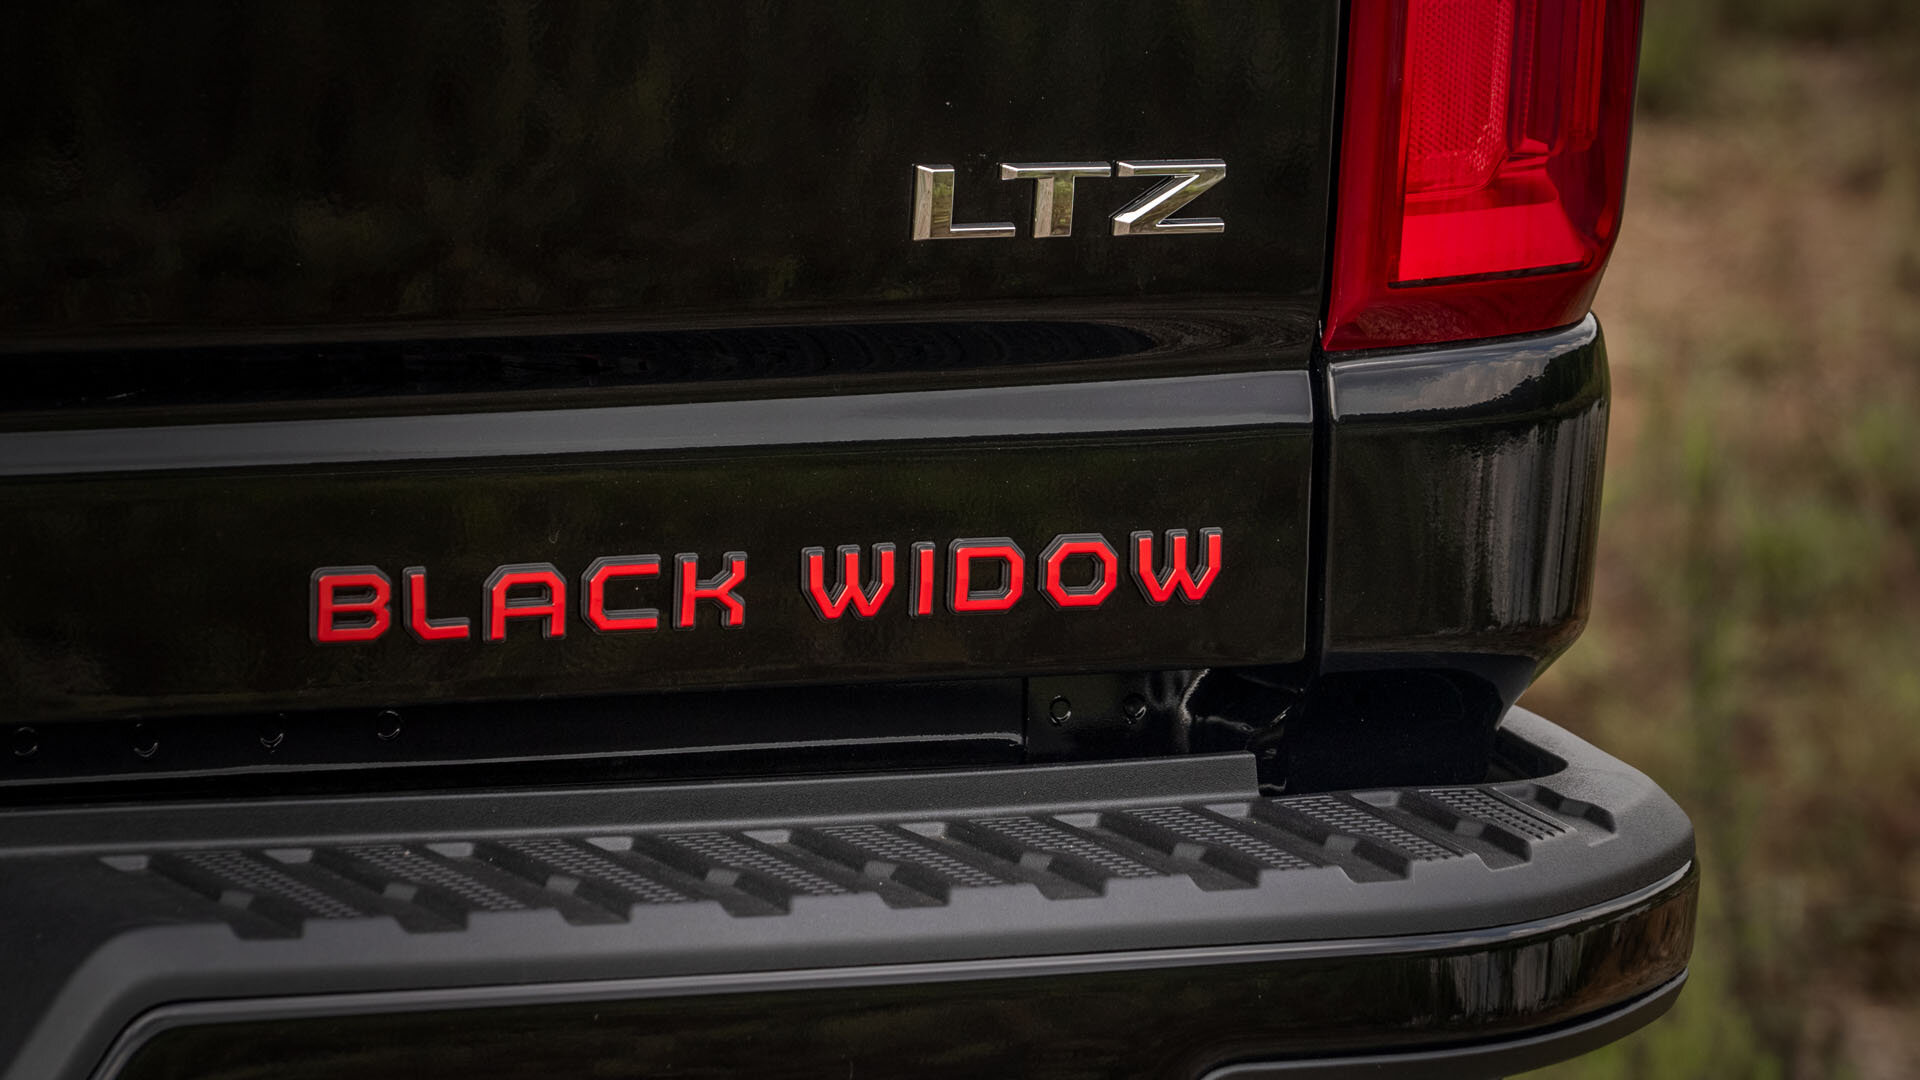 Black Widow Badging